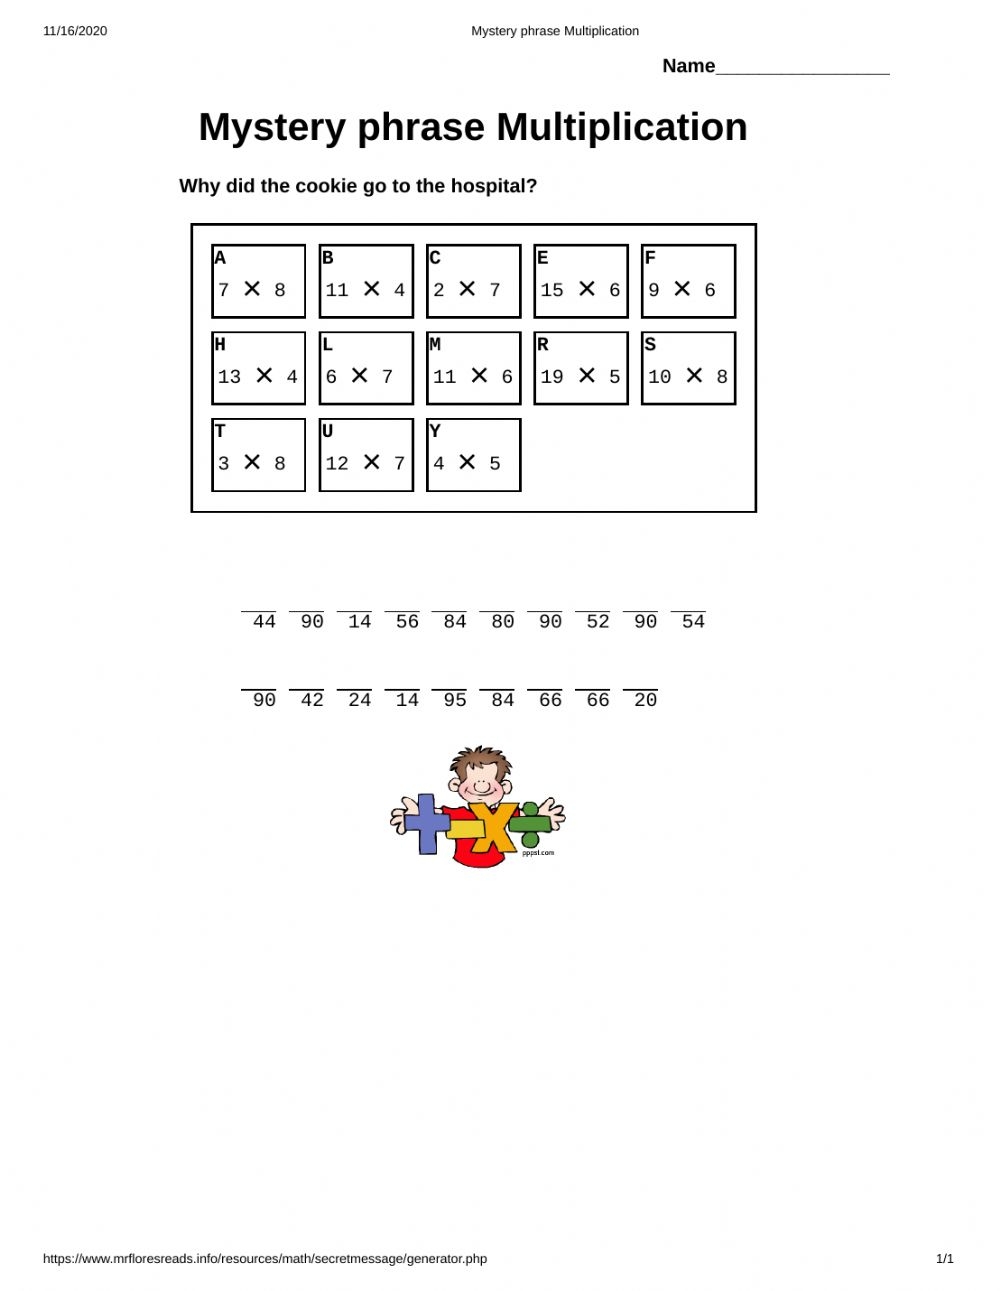 mystery-phrase-multiplication-math-worksheet-answers